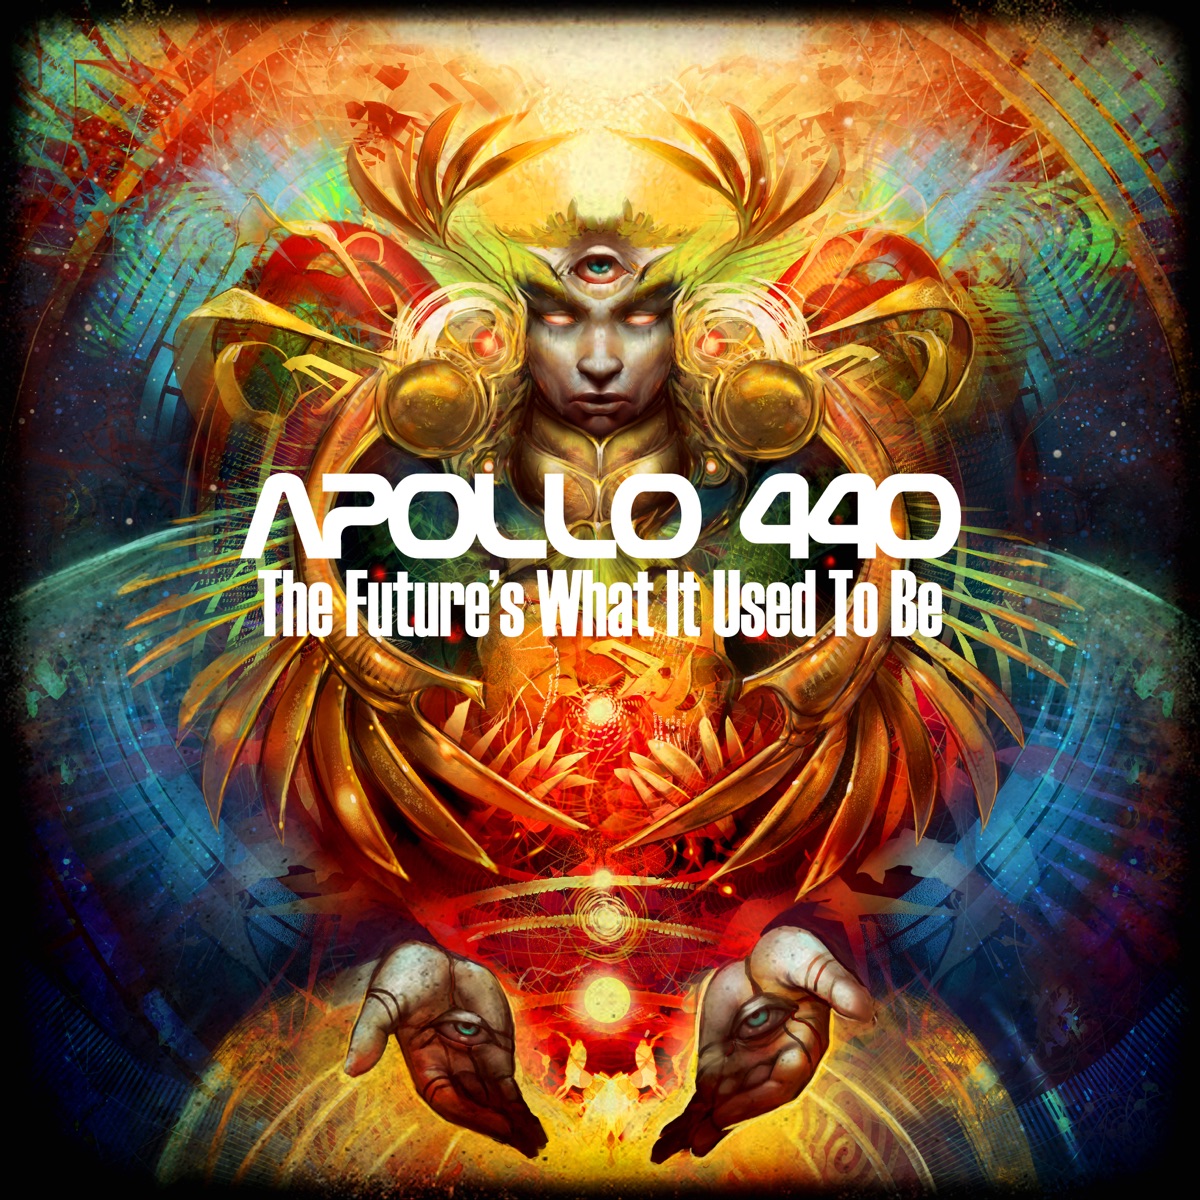 Stop the Rock - EP - Album by Apollo 440 - Apple Music